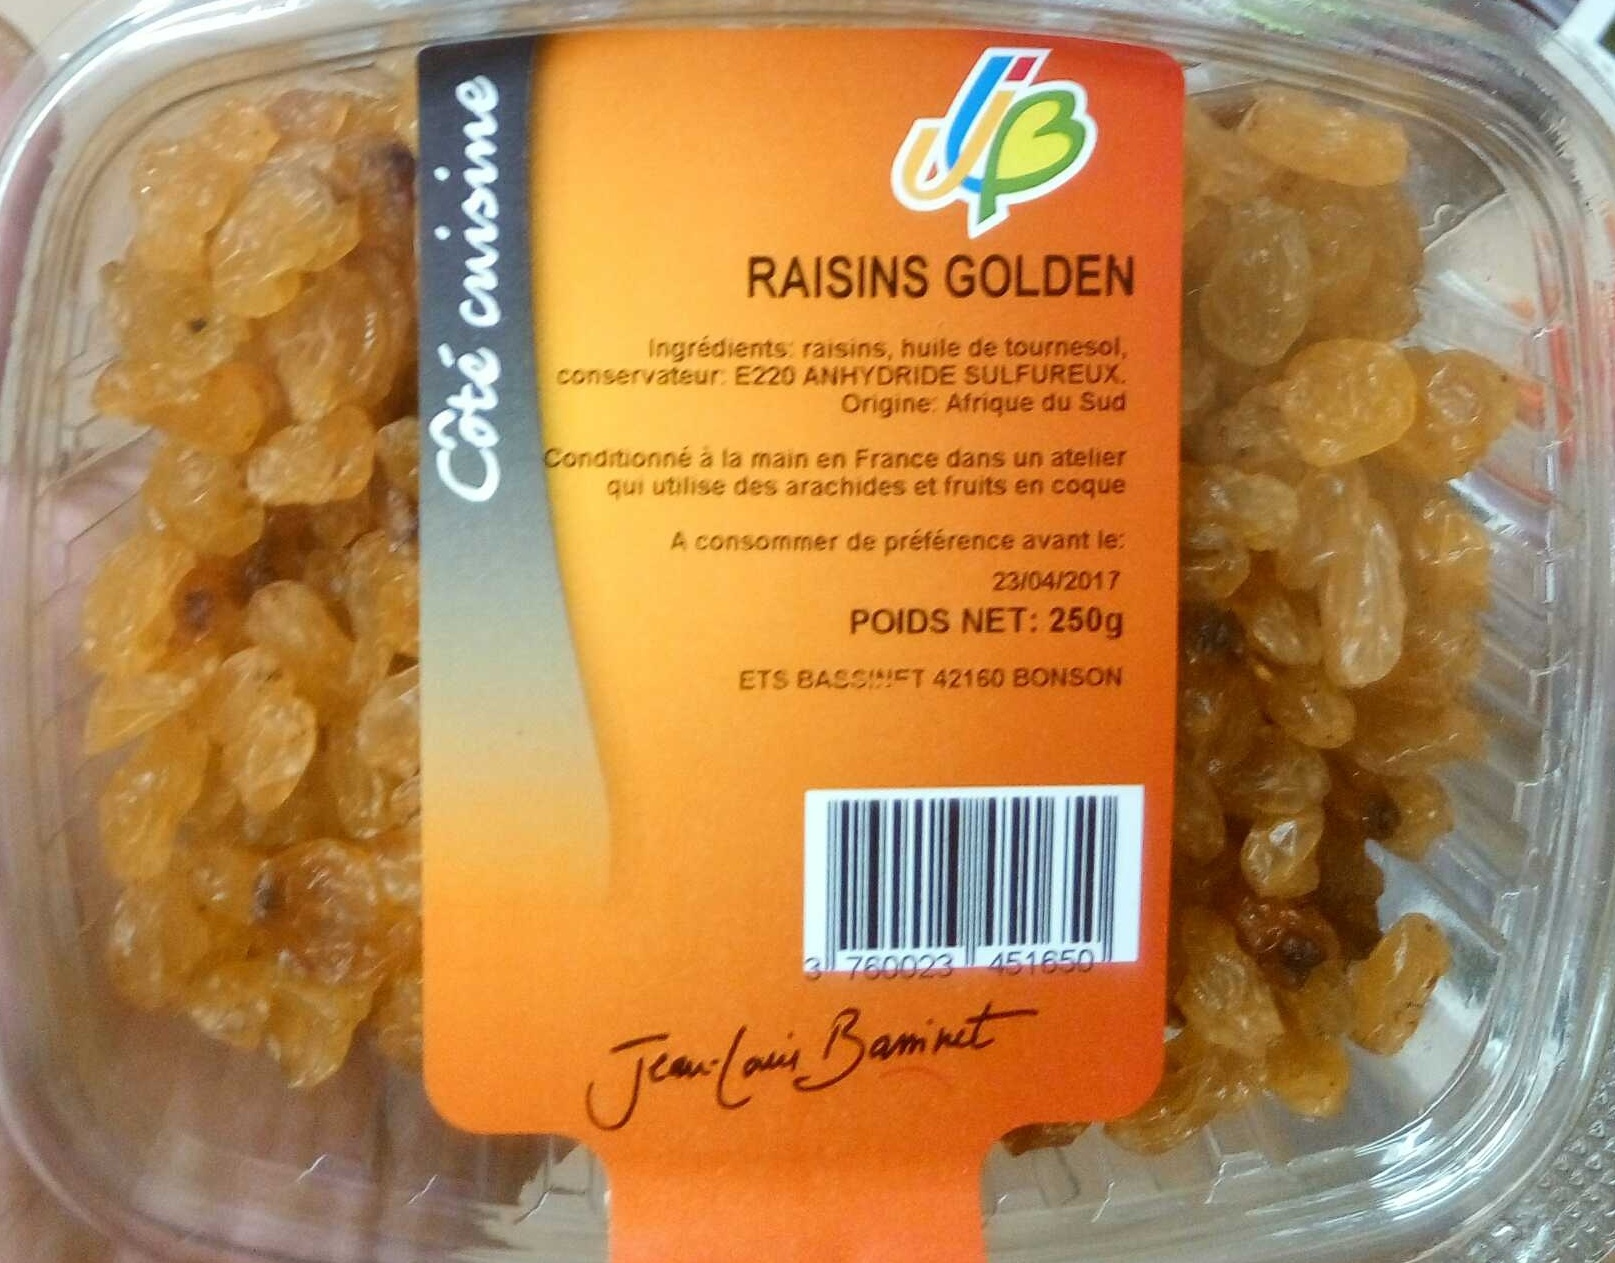 Raisins Golden - Product - fr